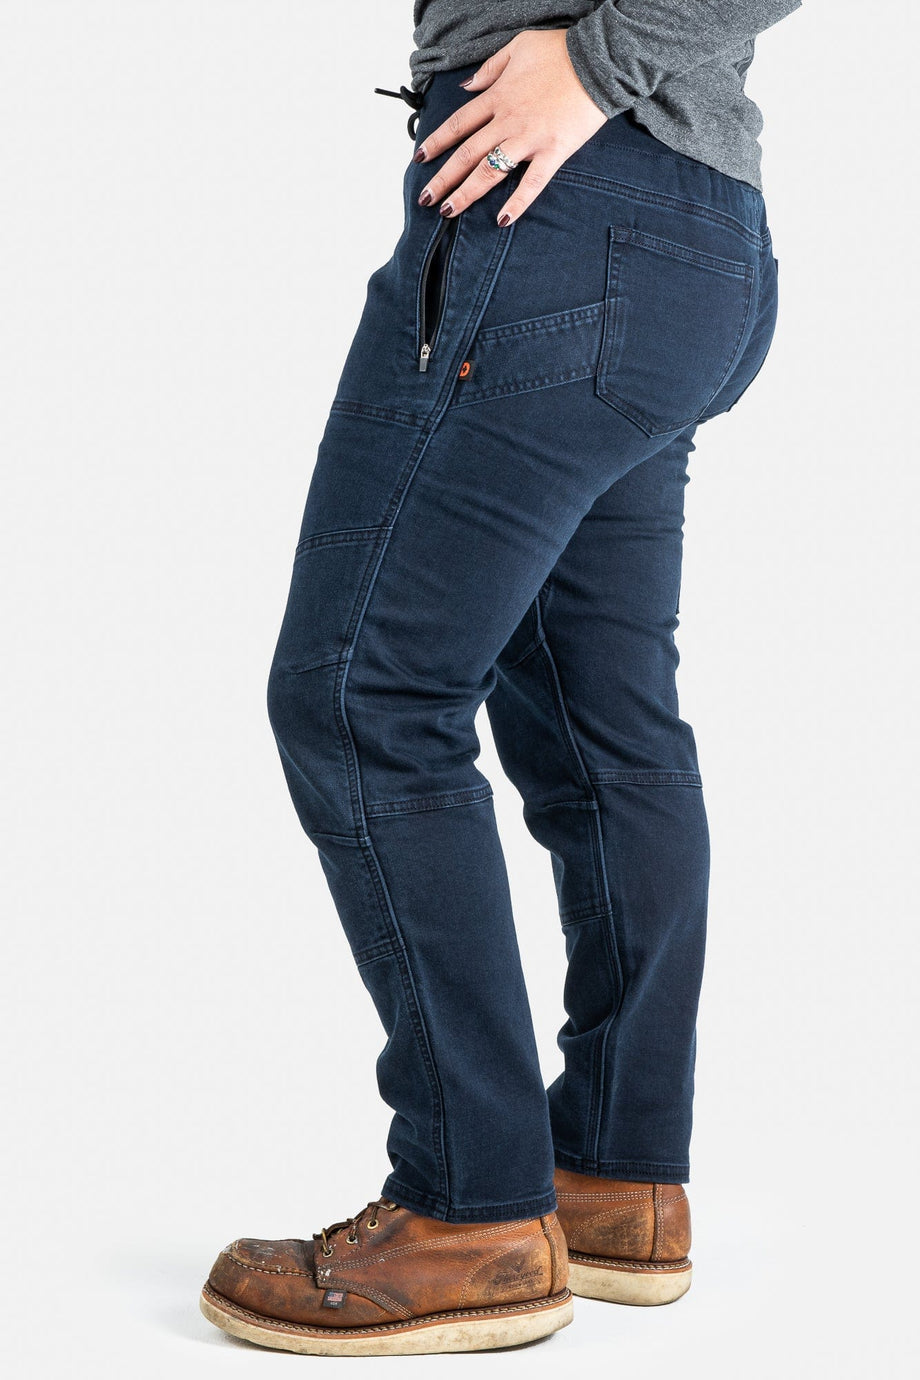 Carhartt Layton Cargo Jeans Womens 16 Short Slim Fit Straight Leg Double  Knee